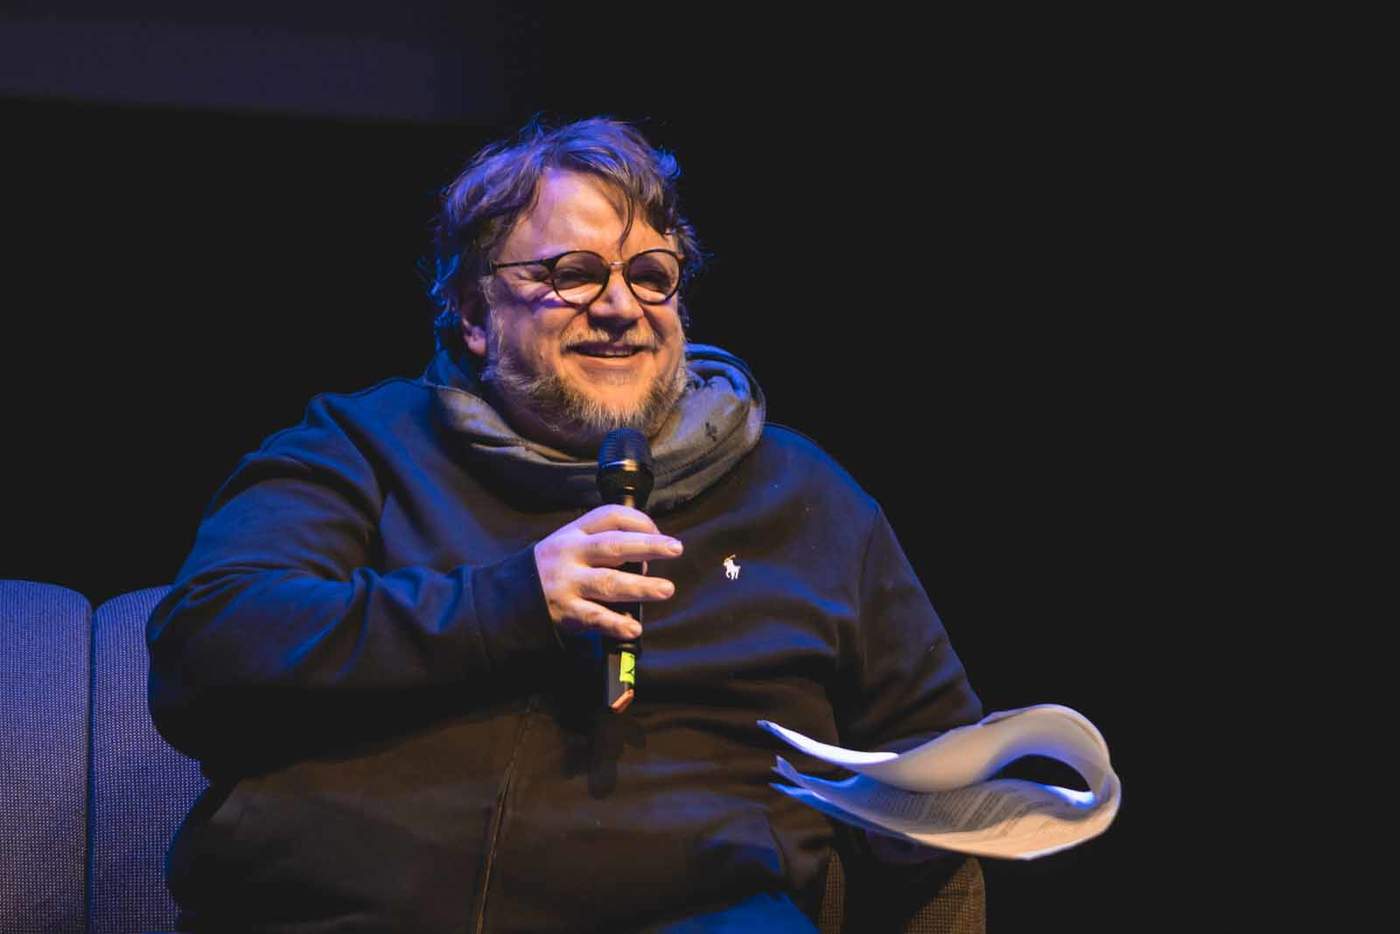 Guillermo del Toro entrega Beca Jenkins-Del Toro a dos ganadores